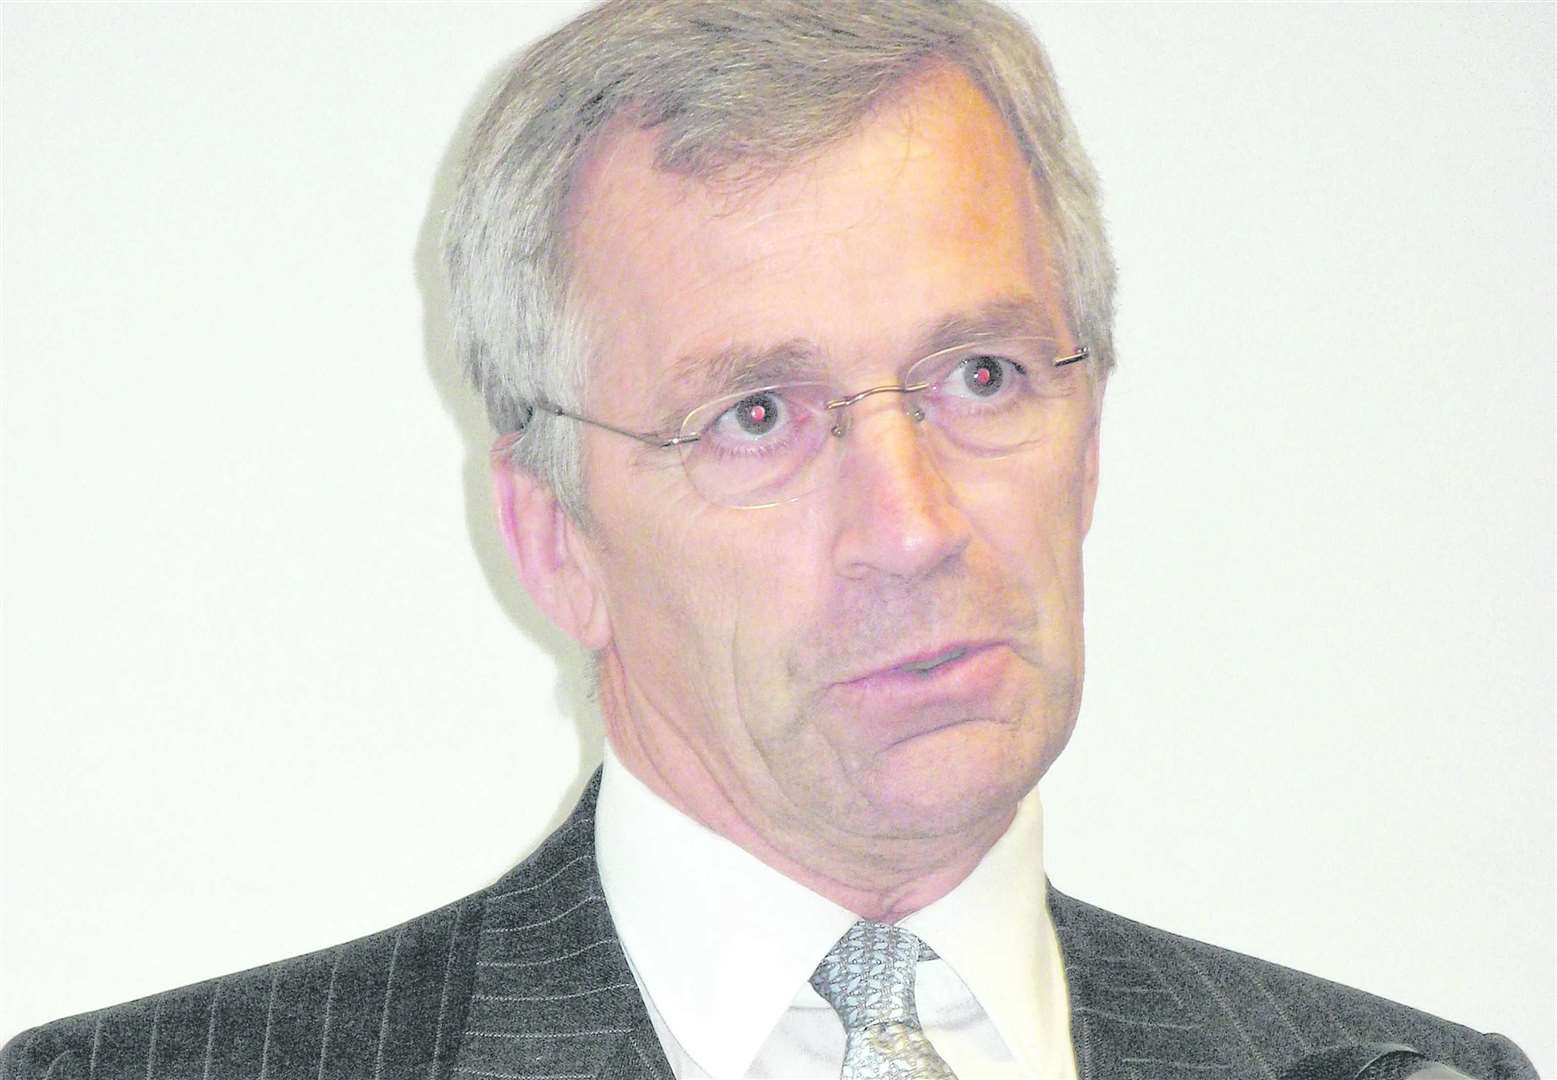 Richard Ashworth, MEP